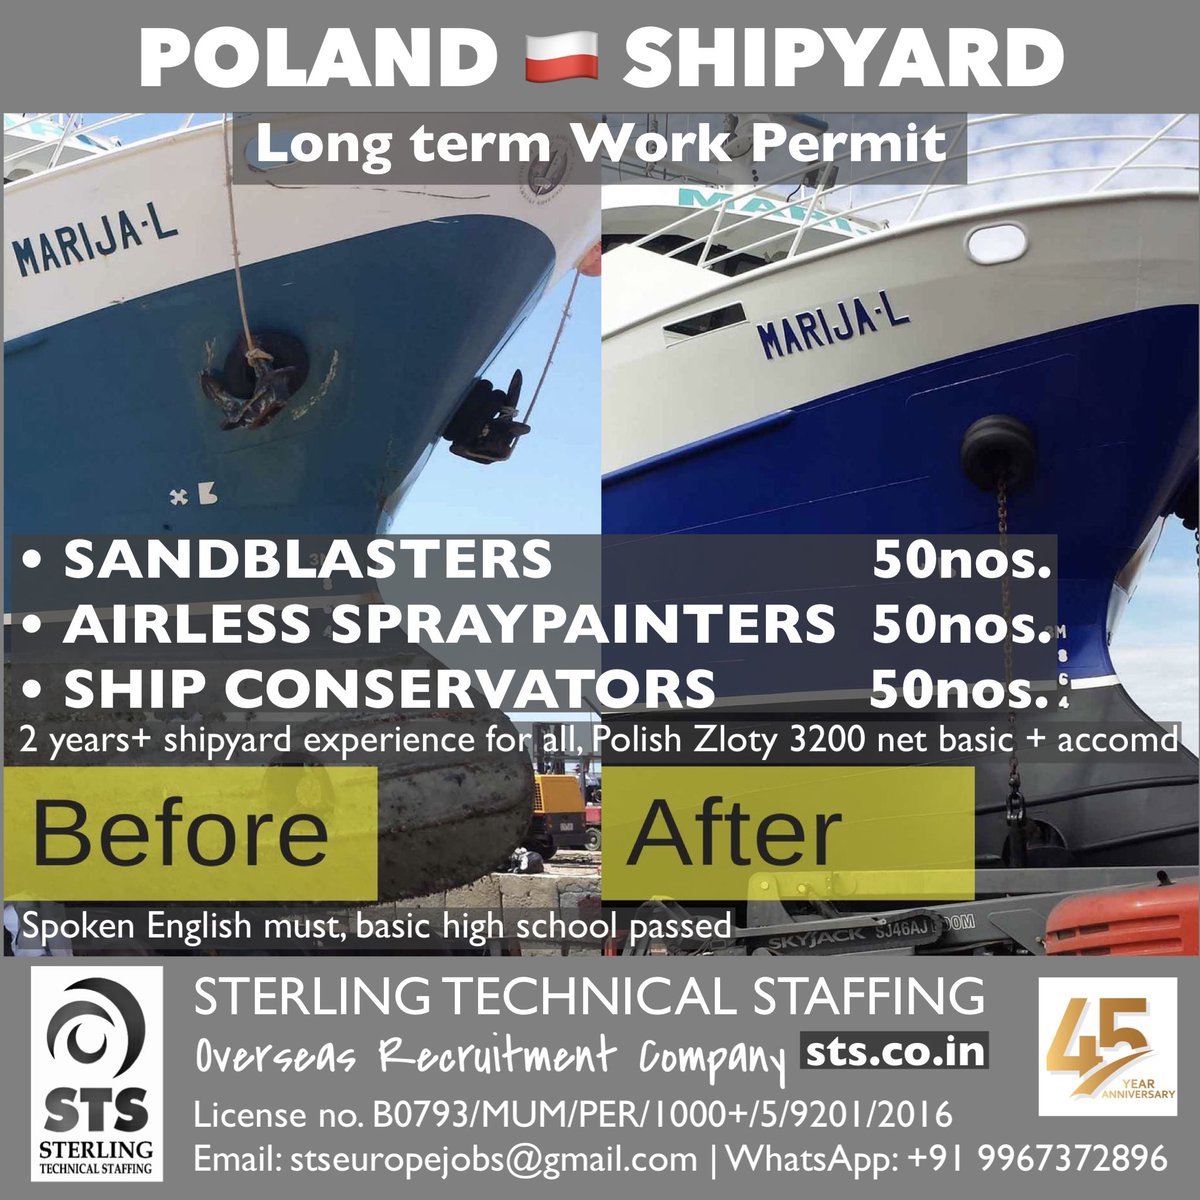 Recruiting now to a leading shipyard in Poland

#poland #polandjobs #europejobs #jobs #JobSearch #europe #europejob #jobseekers #overseasjobs #shipyard #shipyardjobs #Hiring #HIRINGNOW